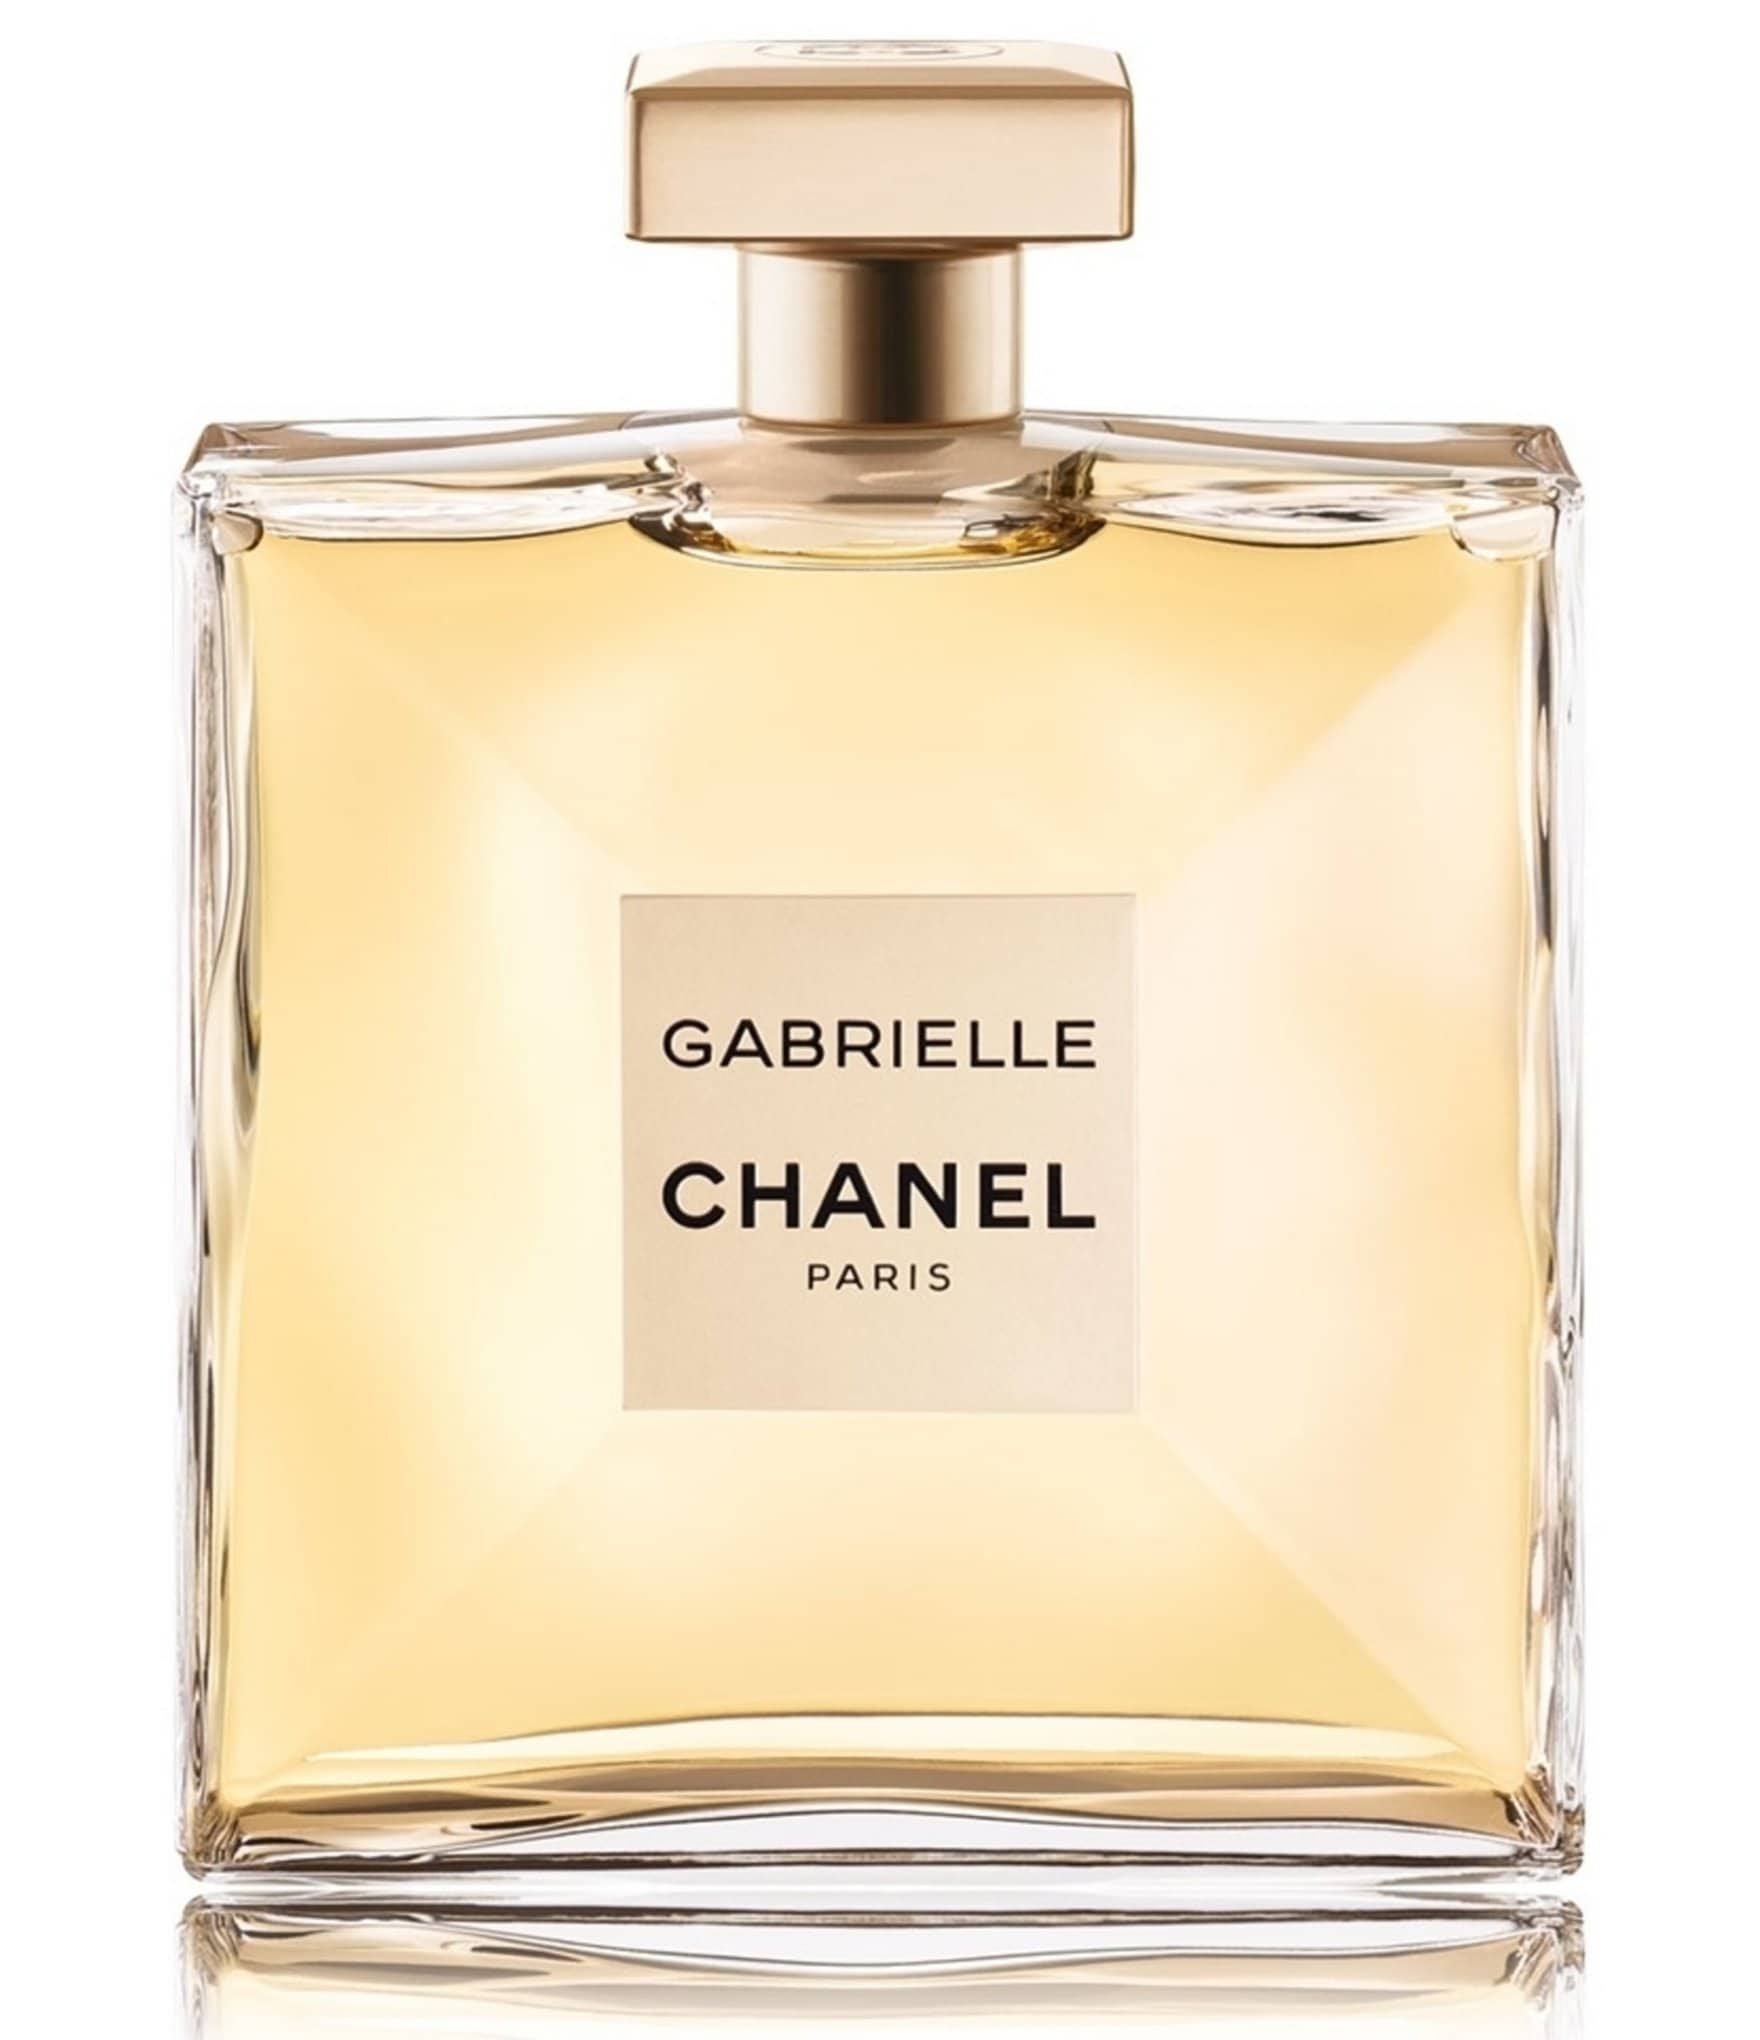 CHANEL GABRIELLE CHANEL EAU DE PARFUM SPRAY | Dillard's